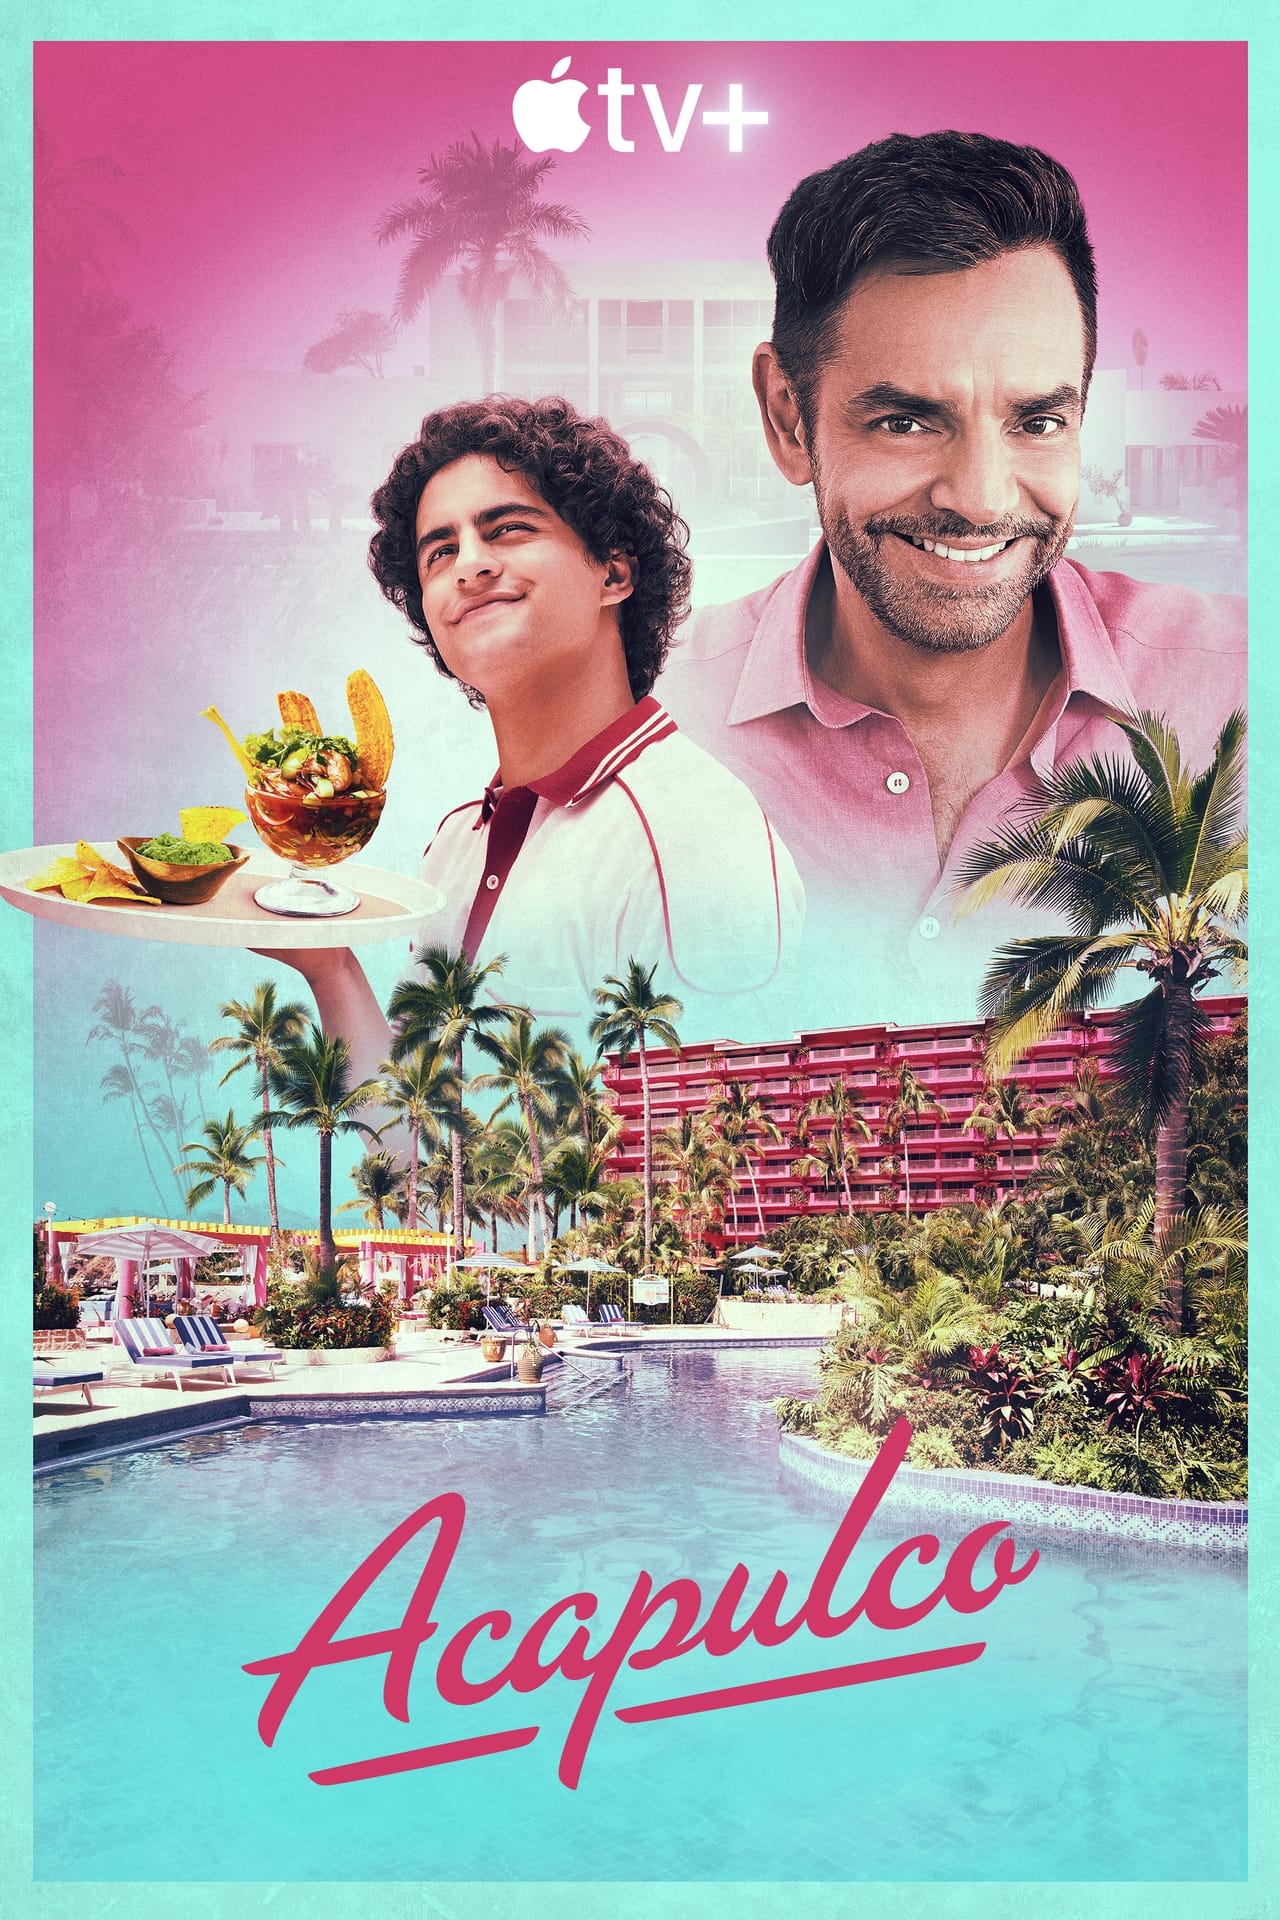 Acapulco (season 1)